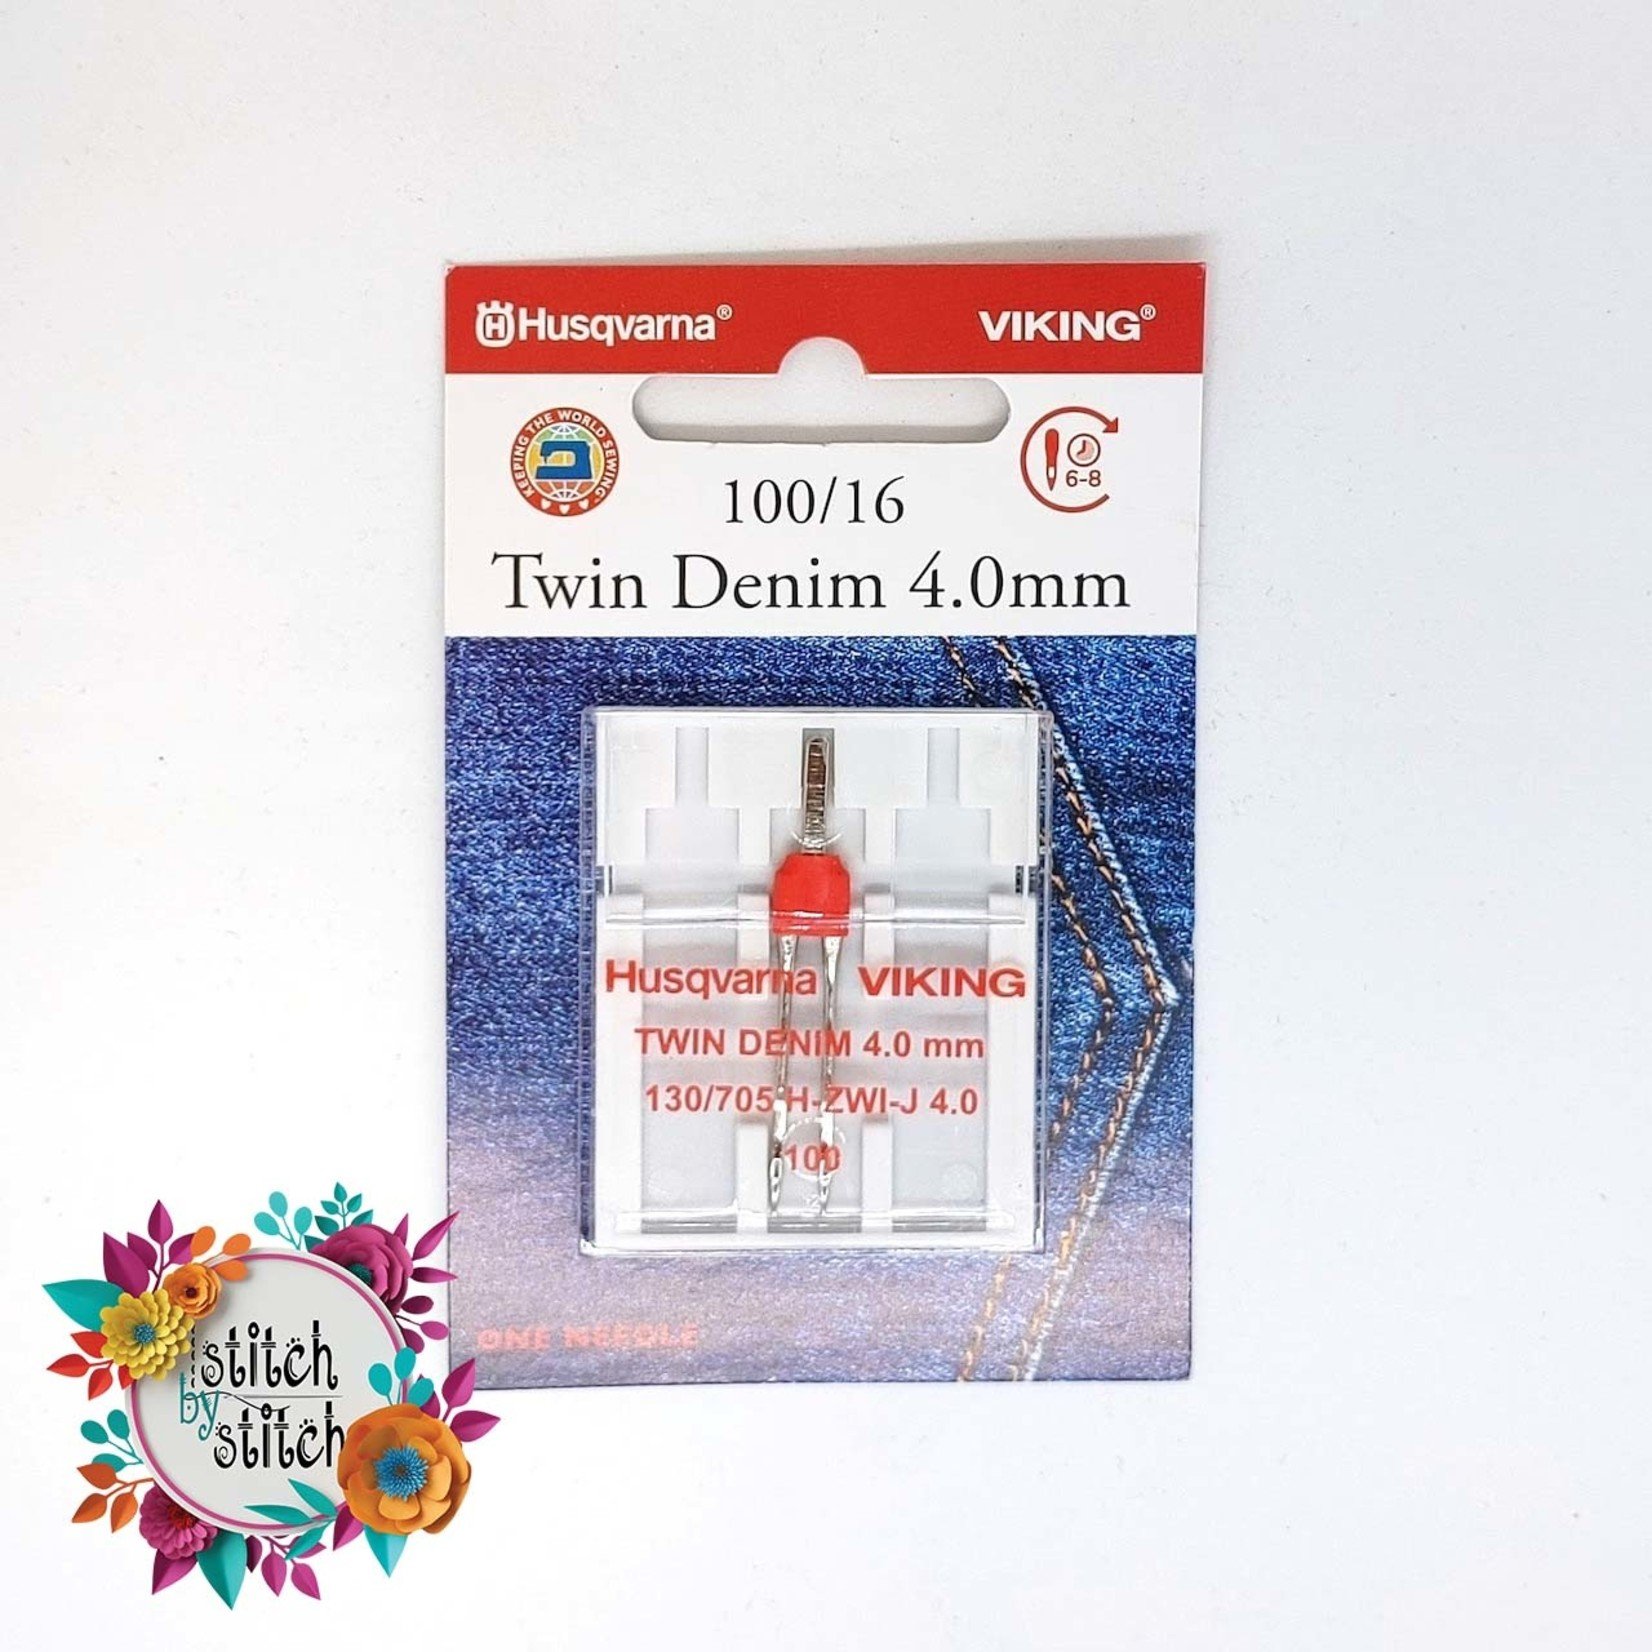 Husqvarna Viking Husqvarna Viking Twin Denim Needle - Size 100/16 - 4.0mm 1 pack